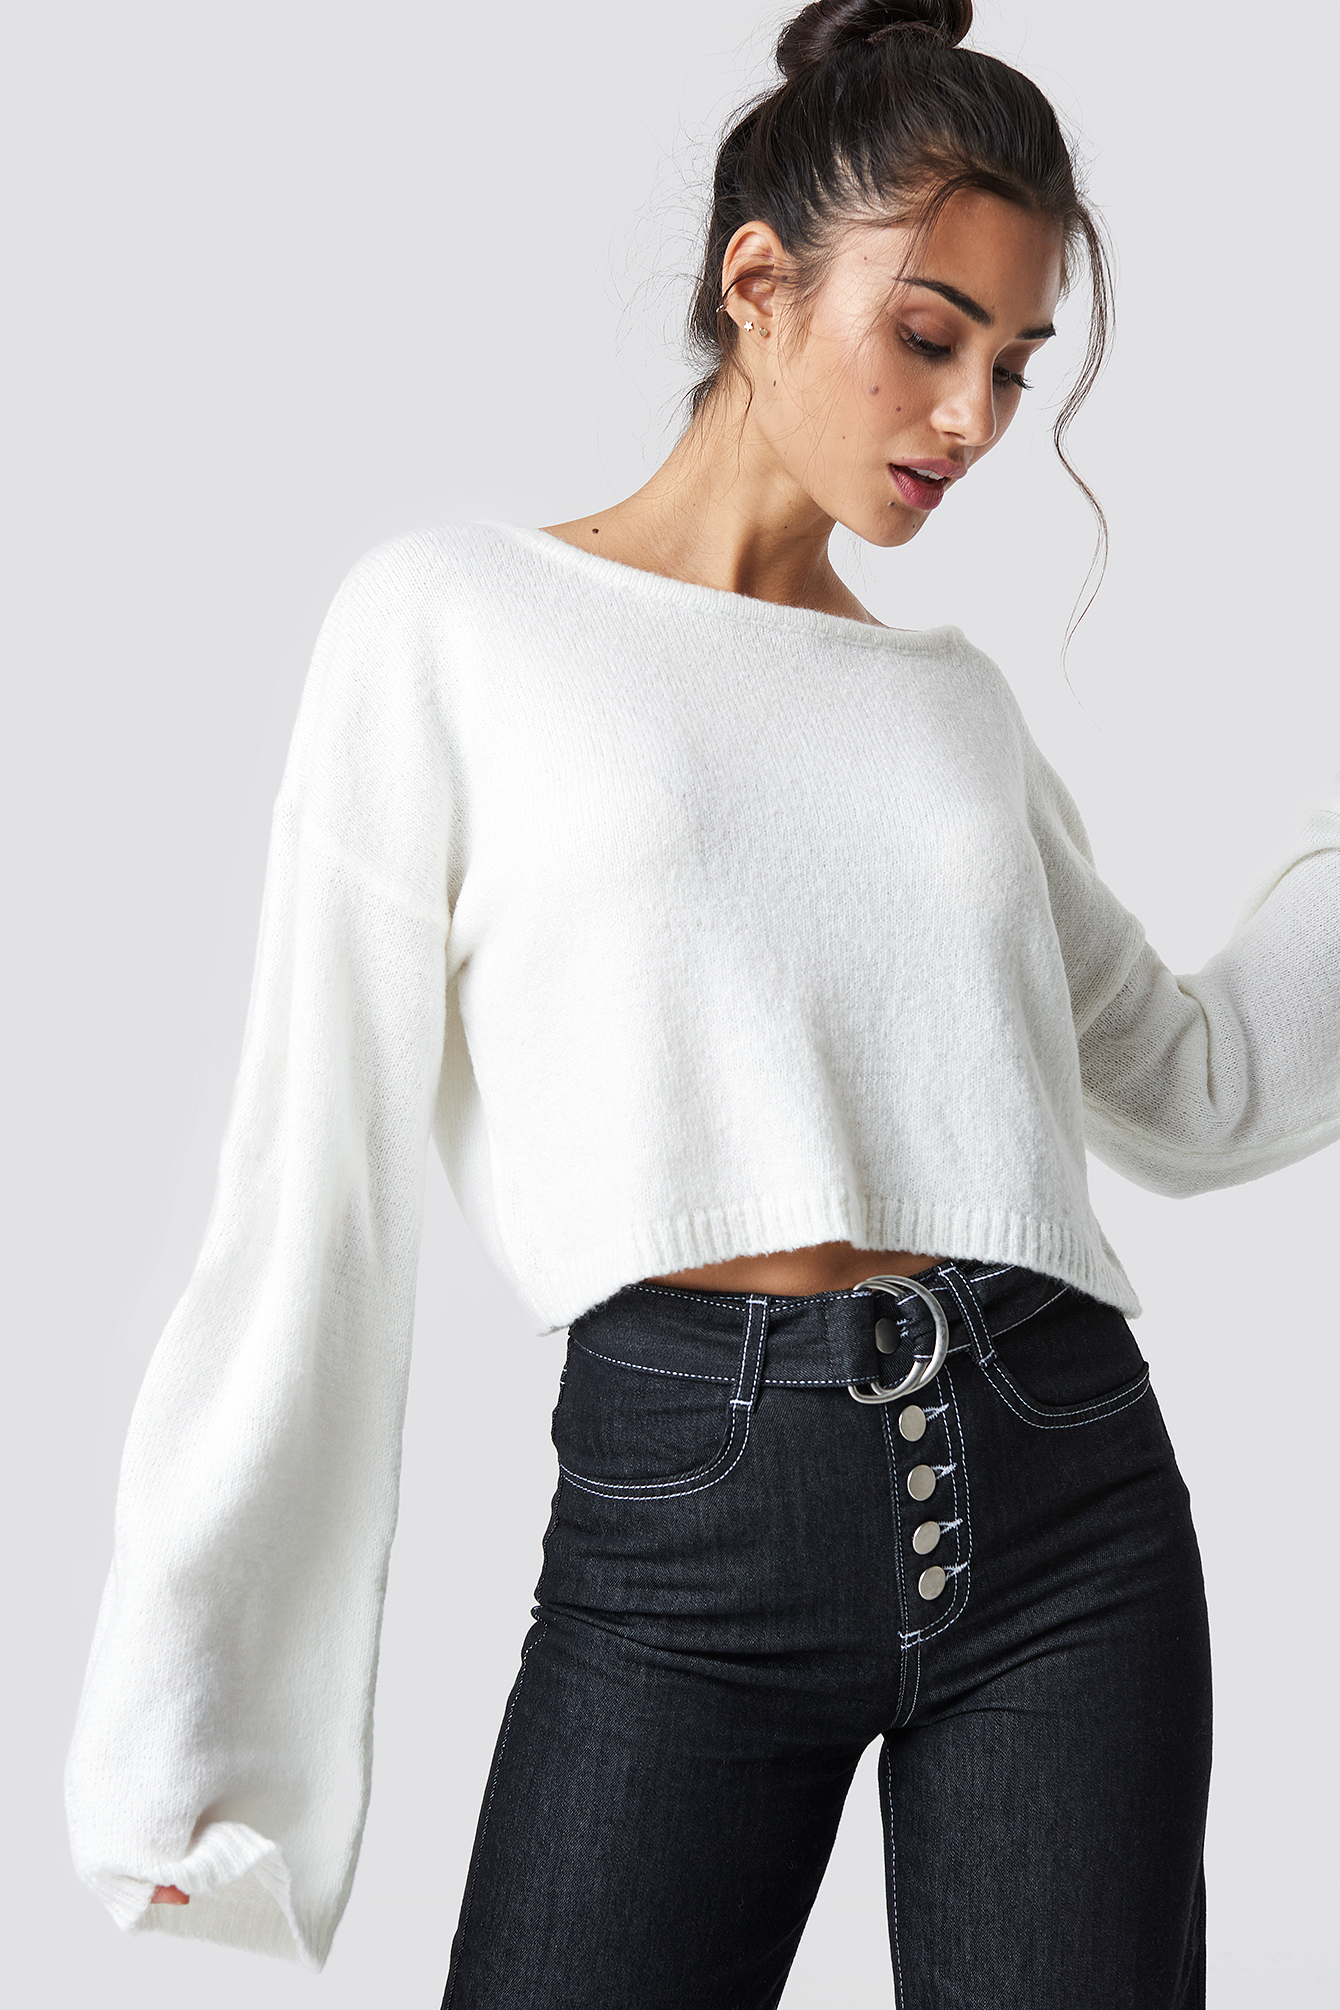 Chloé B x NA-KD Knitted Boatneck Sweater - White